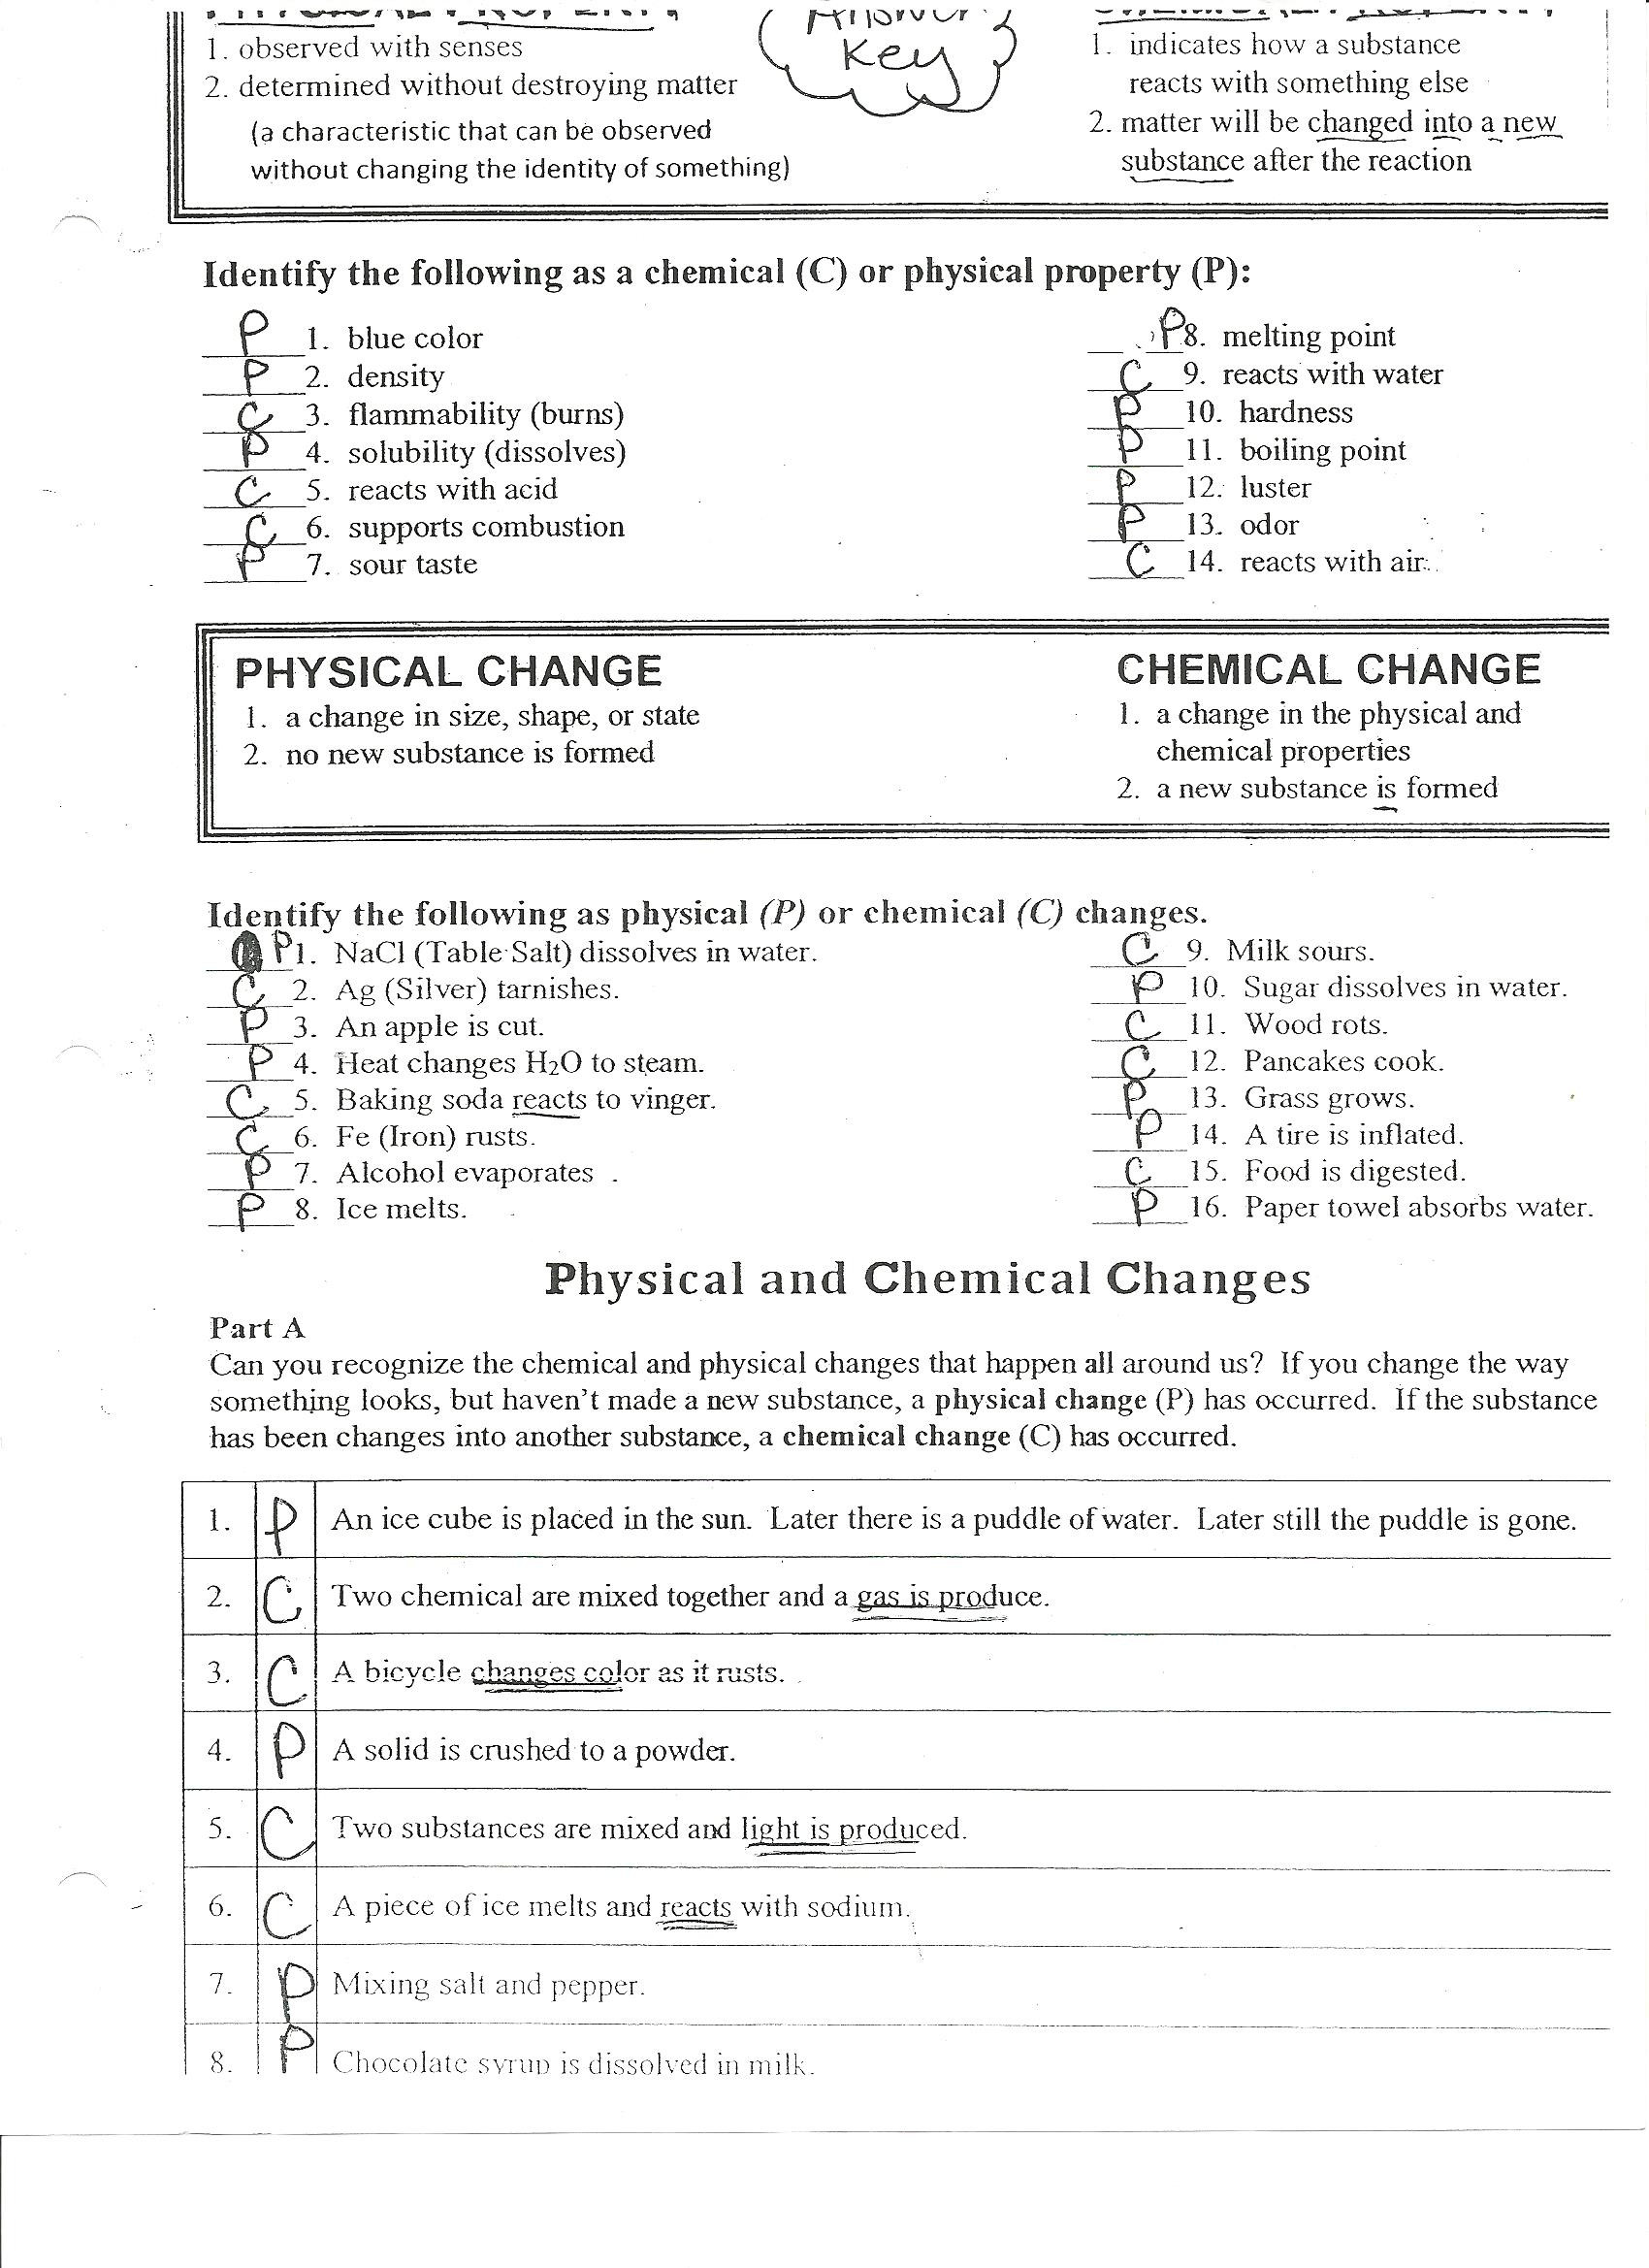 Physical Vs Chemical Properties Worksheet Chemical and Physical Properties Worksheet Answers